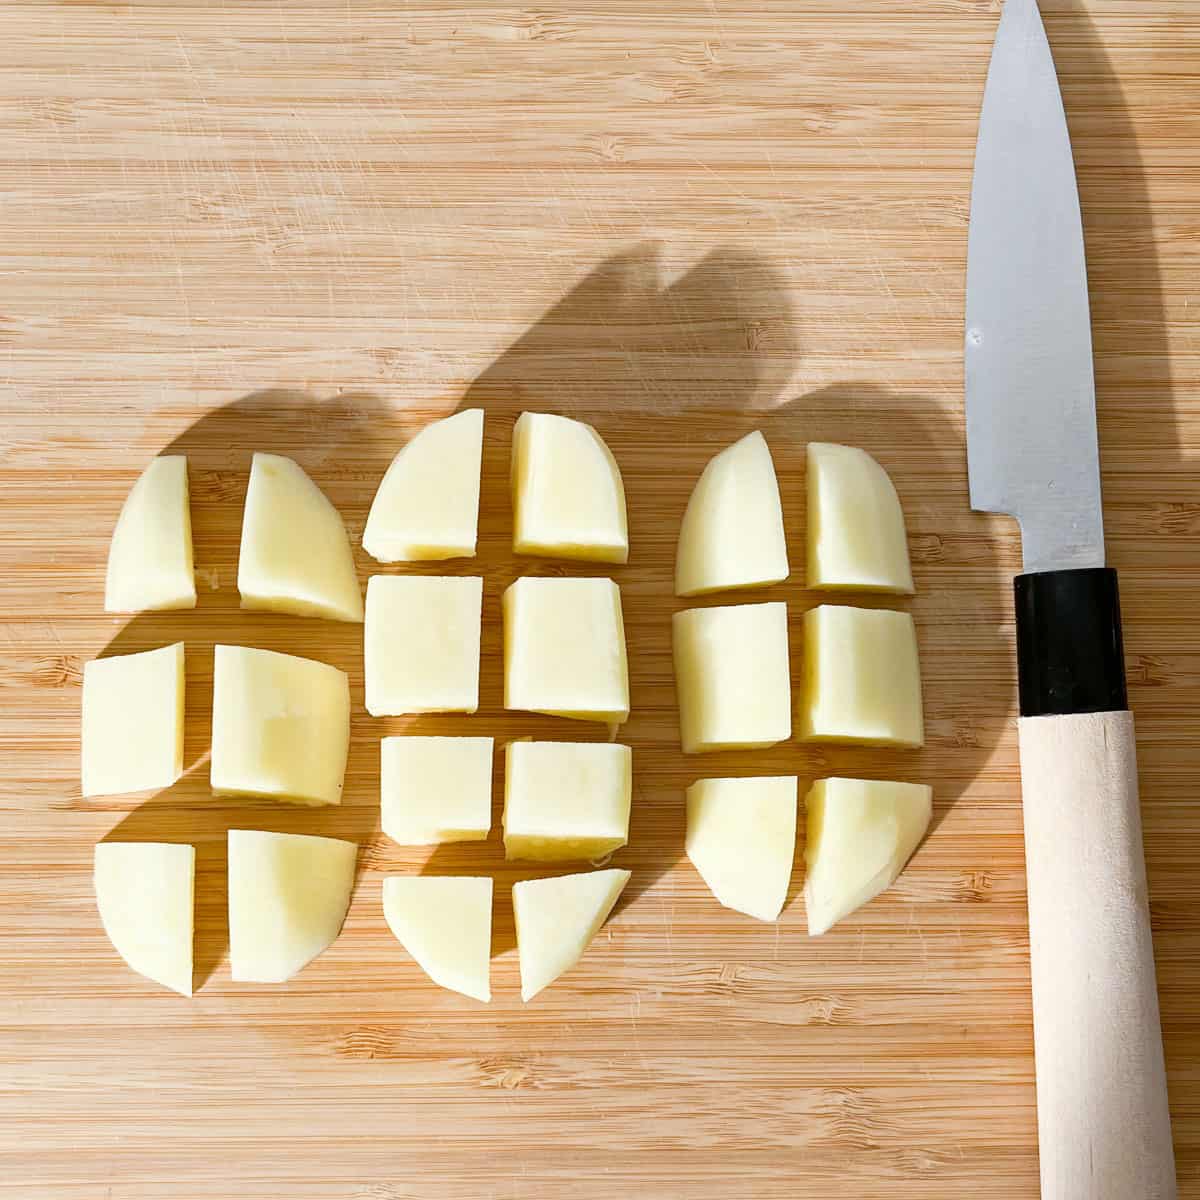 A potato on a cutting board cut into cubes.